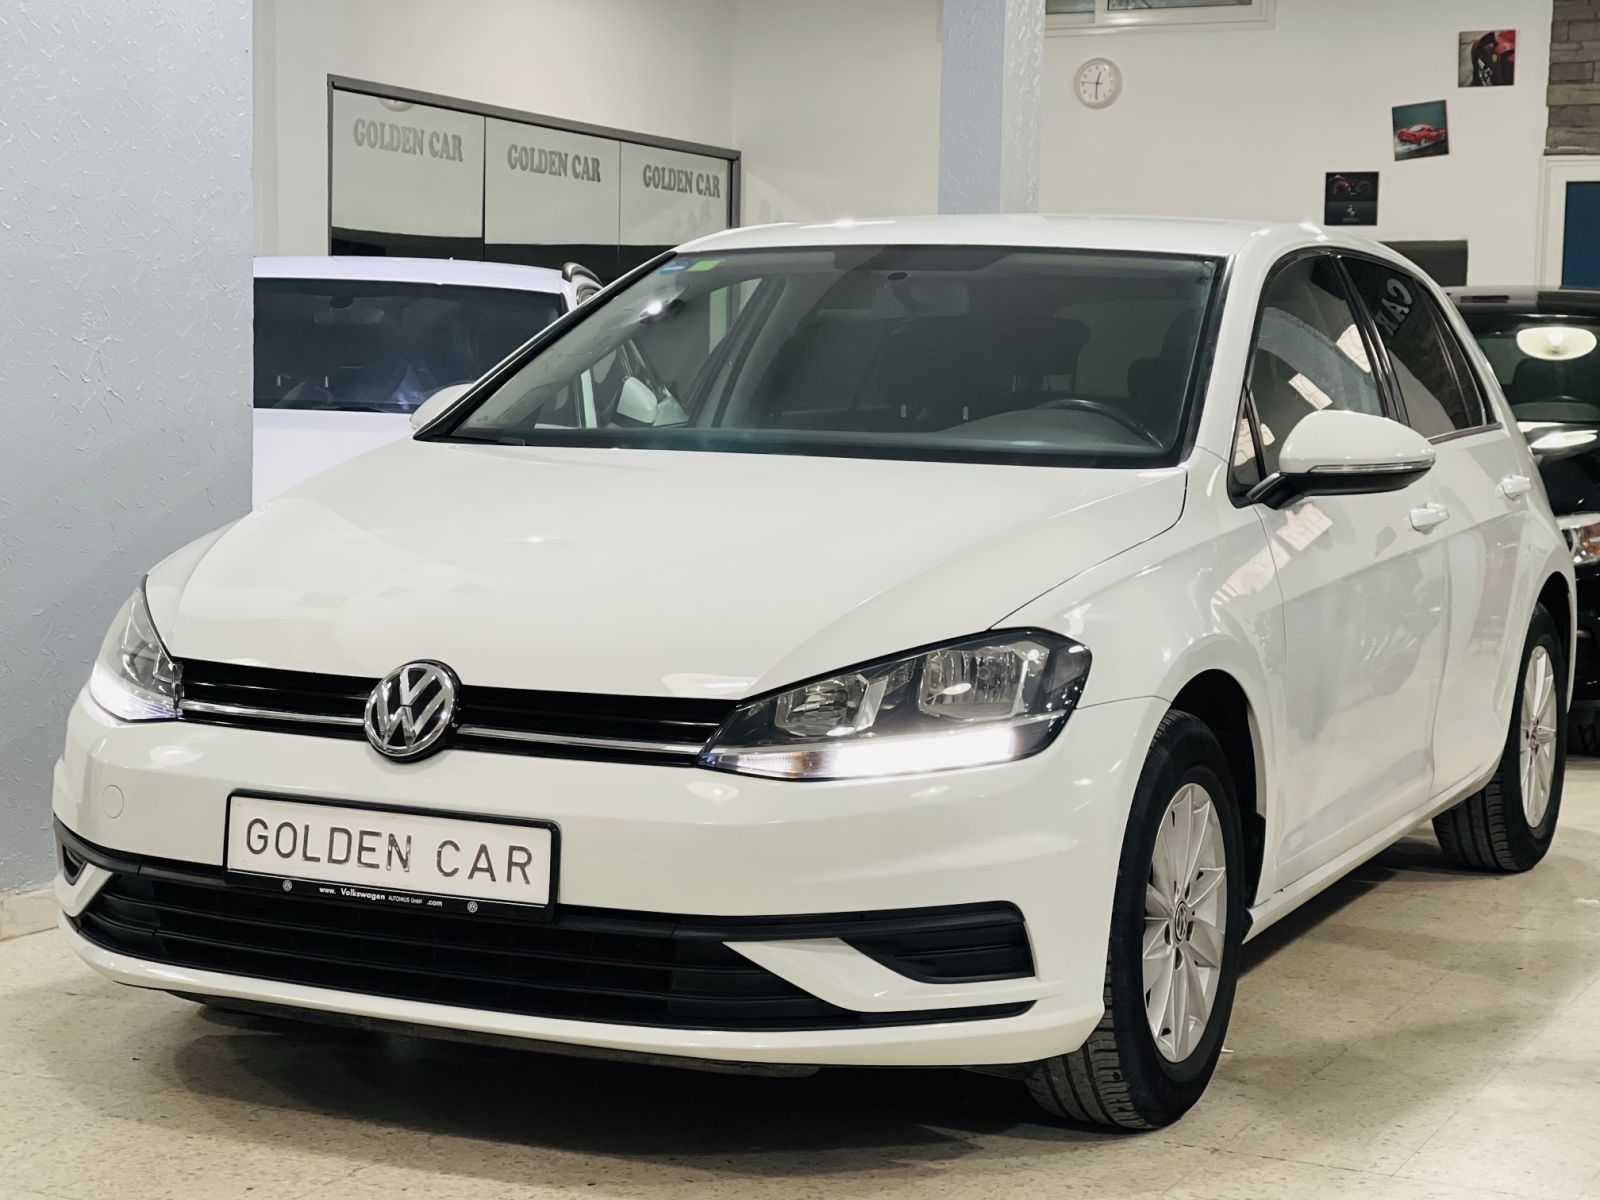 Autoradio ANDROID VW Golf, vente et installation des systèmes d'alarme  voiture Tunisie